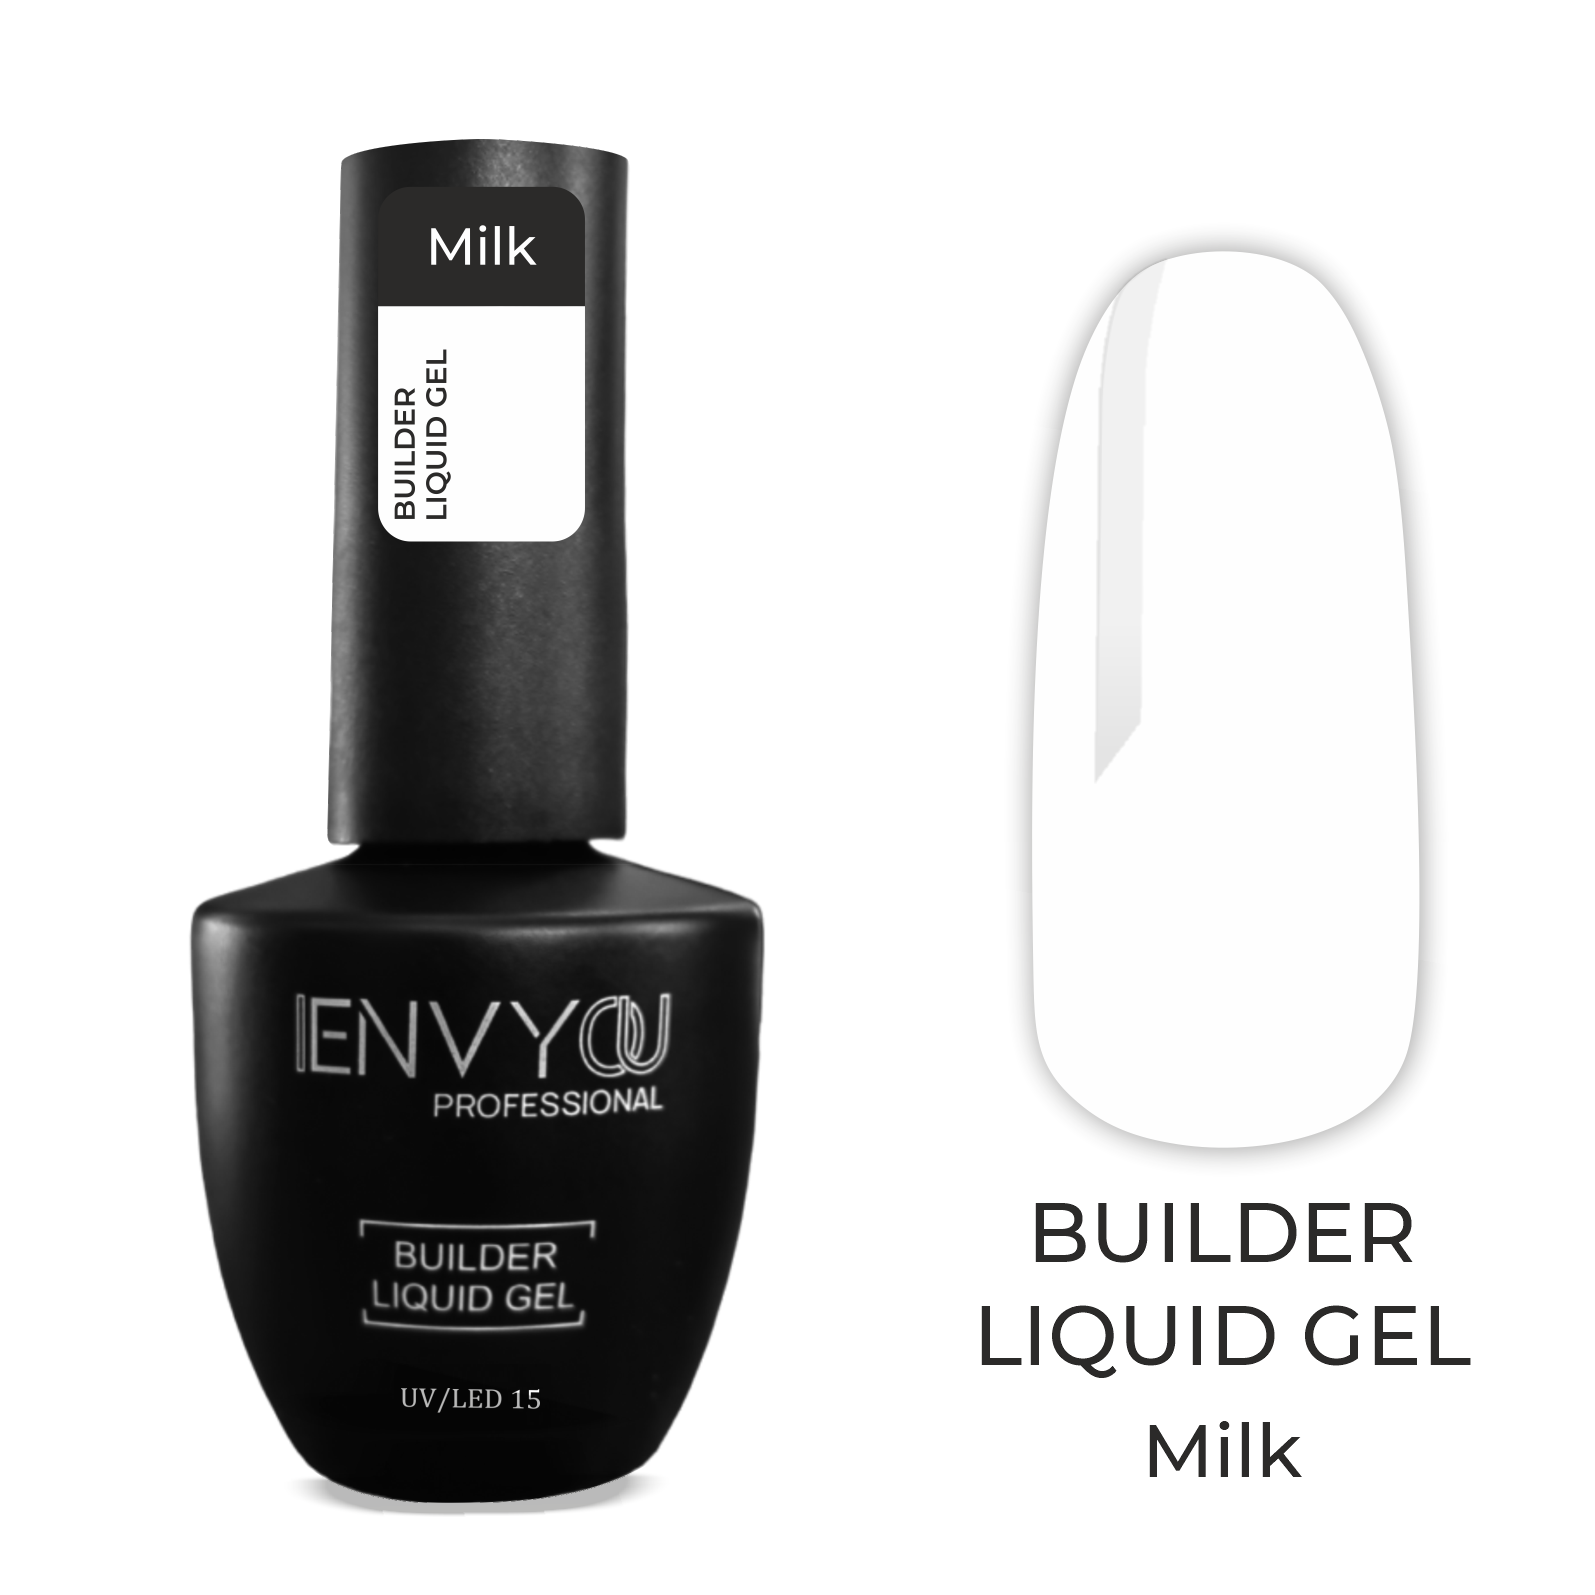 I ENVY YOU Builder Liquid Gel, 15g (Milk)